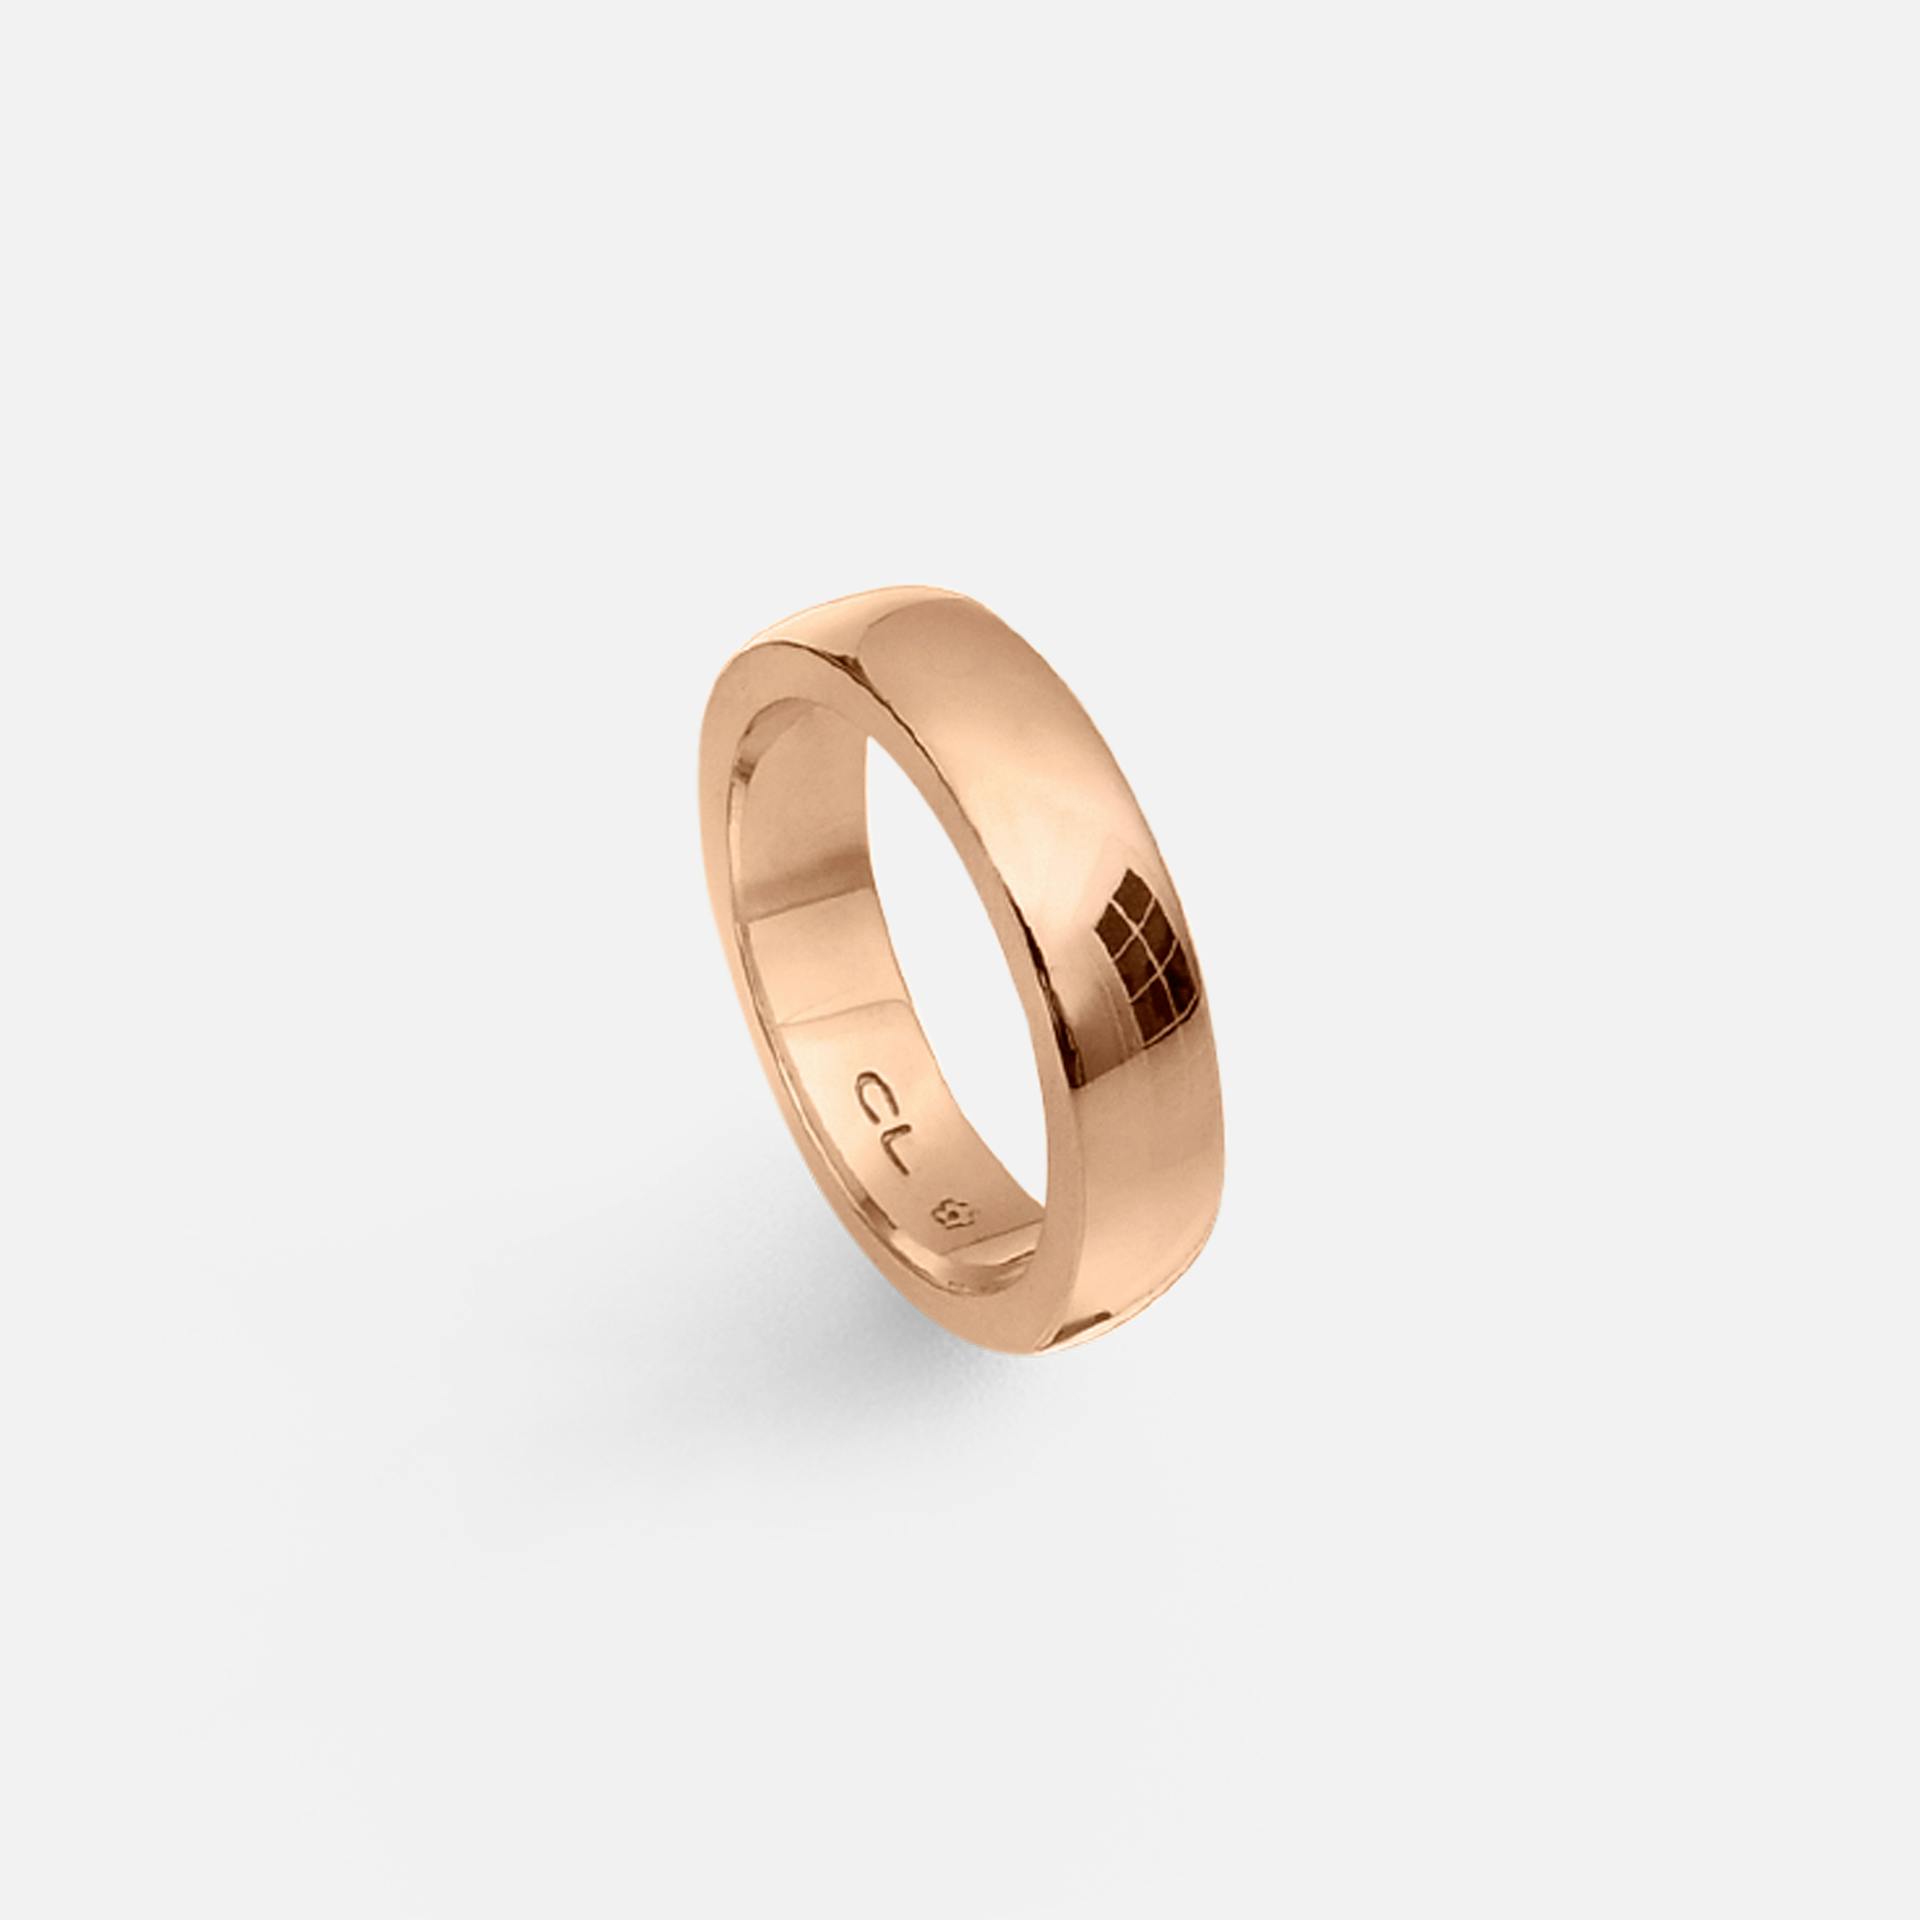 Forever Love Men's Ring in Polished Rose Gold  |  Ole Lynggaard Copenhagen